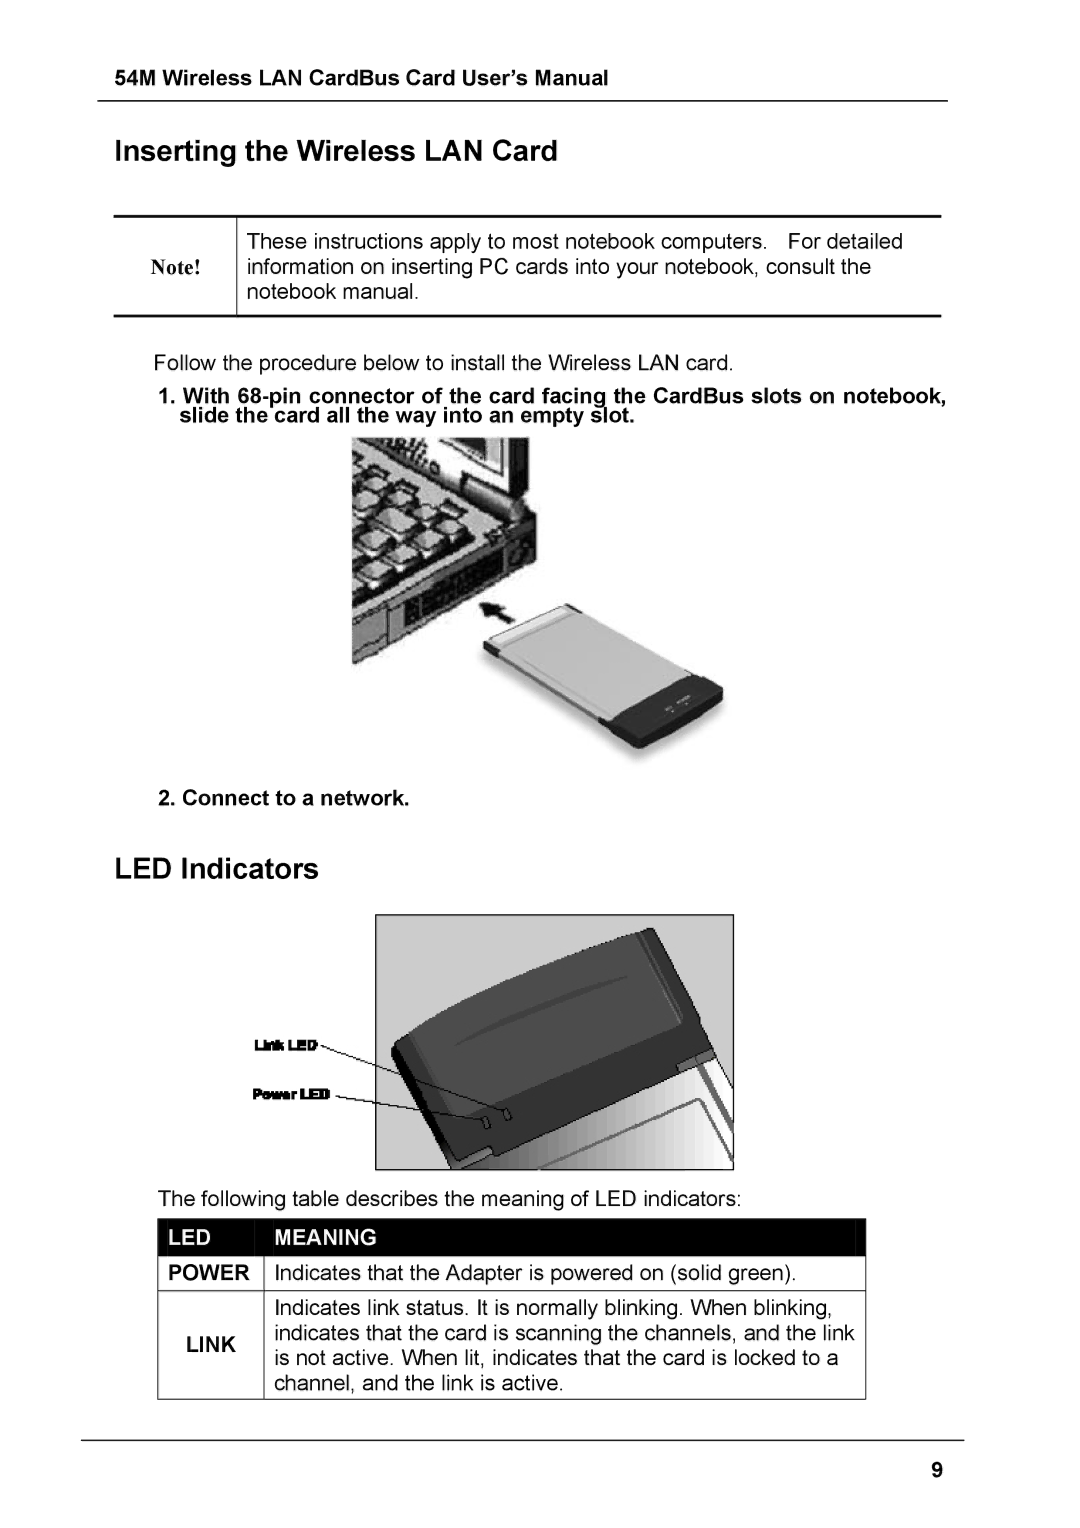 Boca Research 54M user manual Inserting the Wireless LAN Card, LED Indicators 